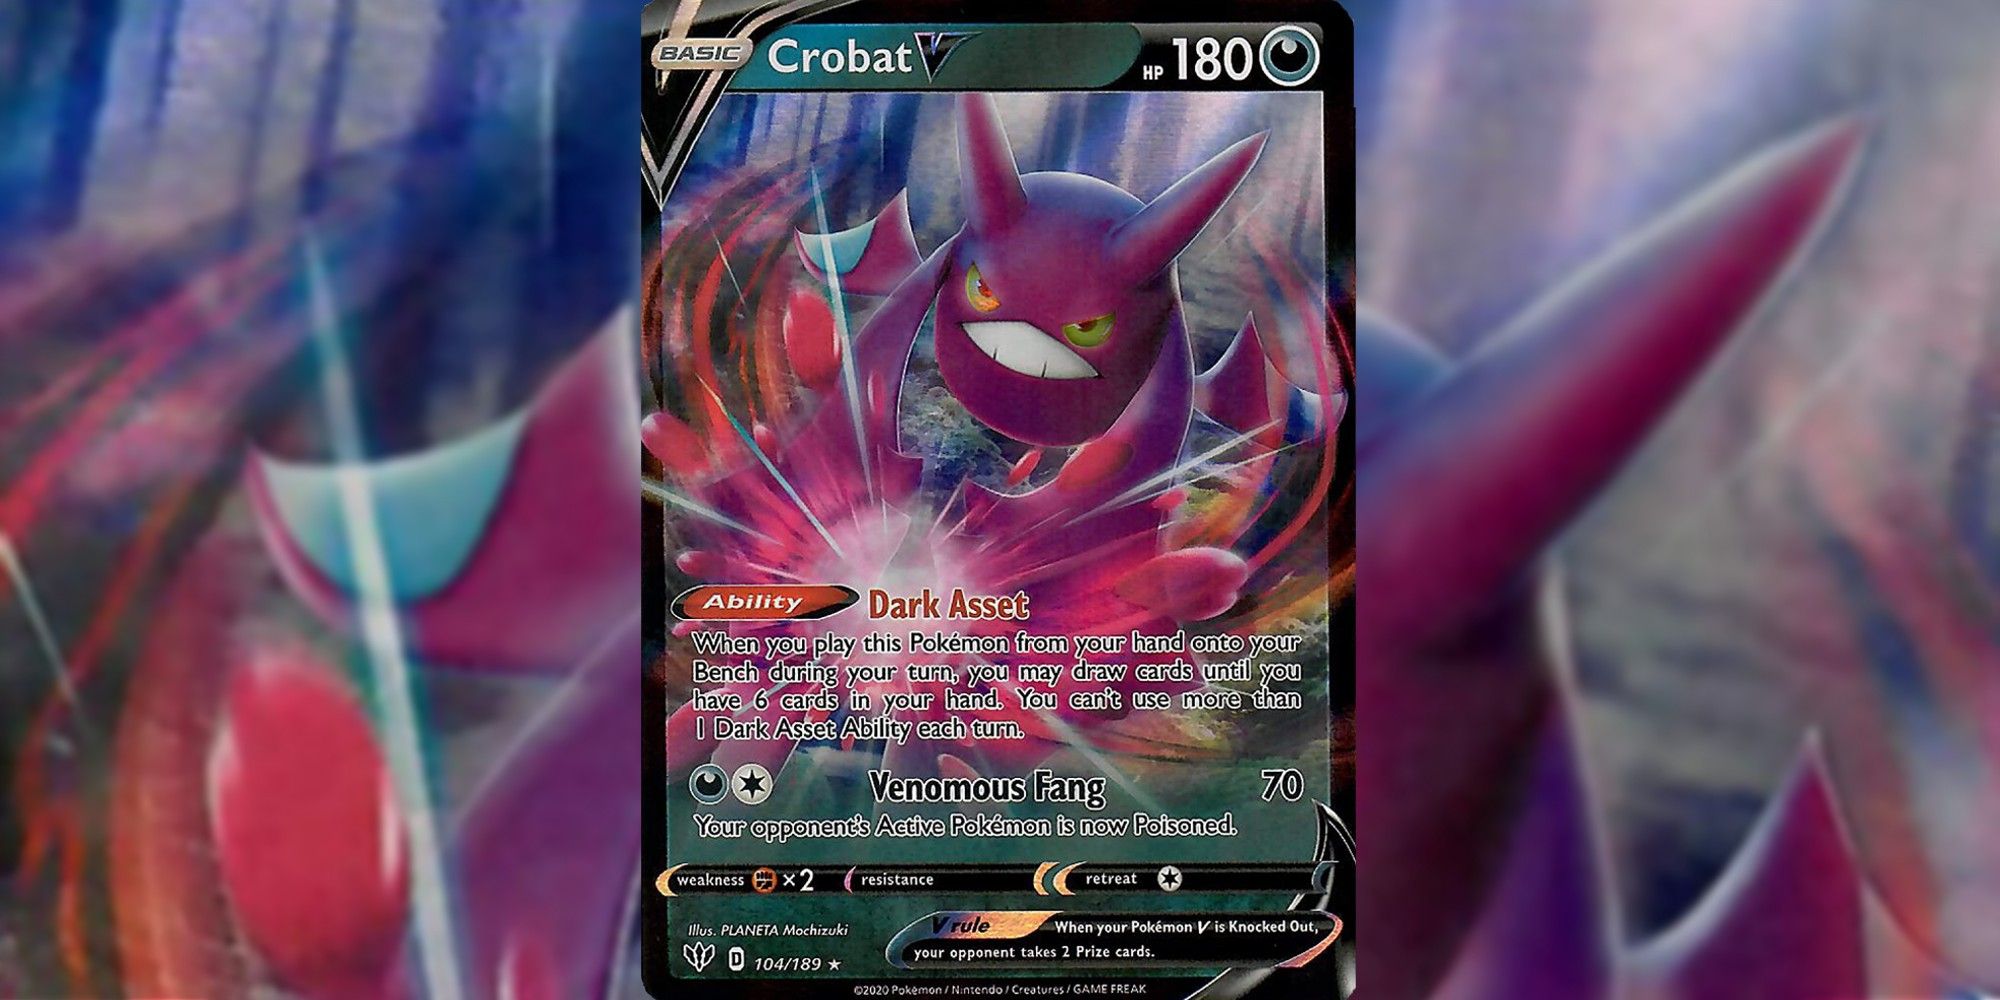 Crobat V card with blurred background